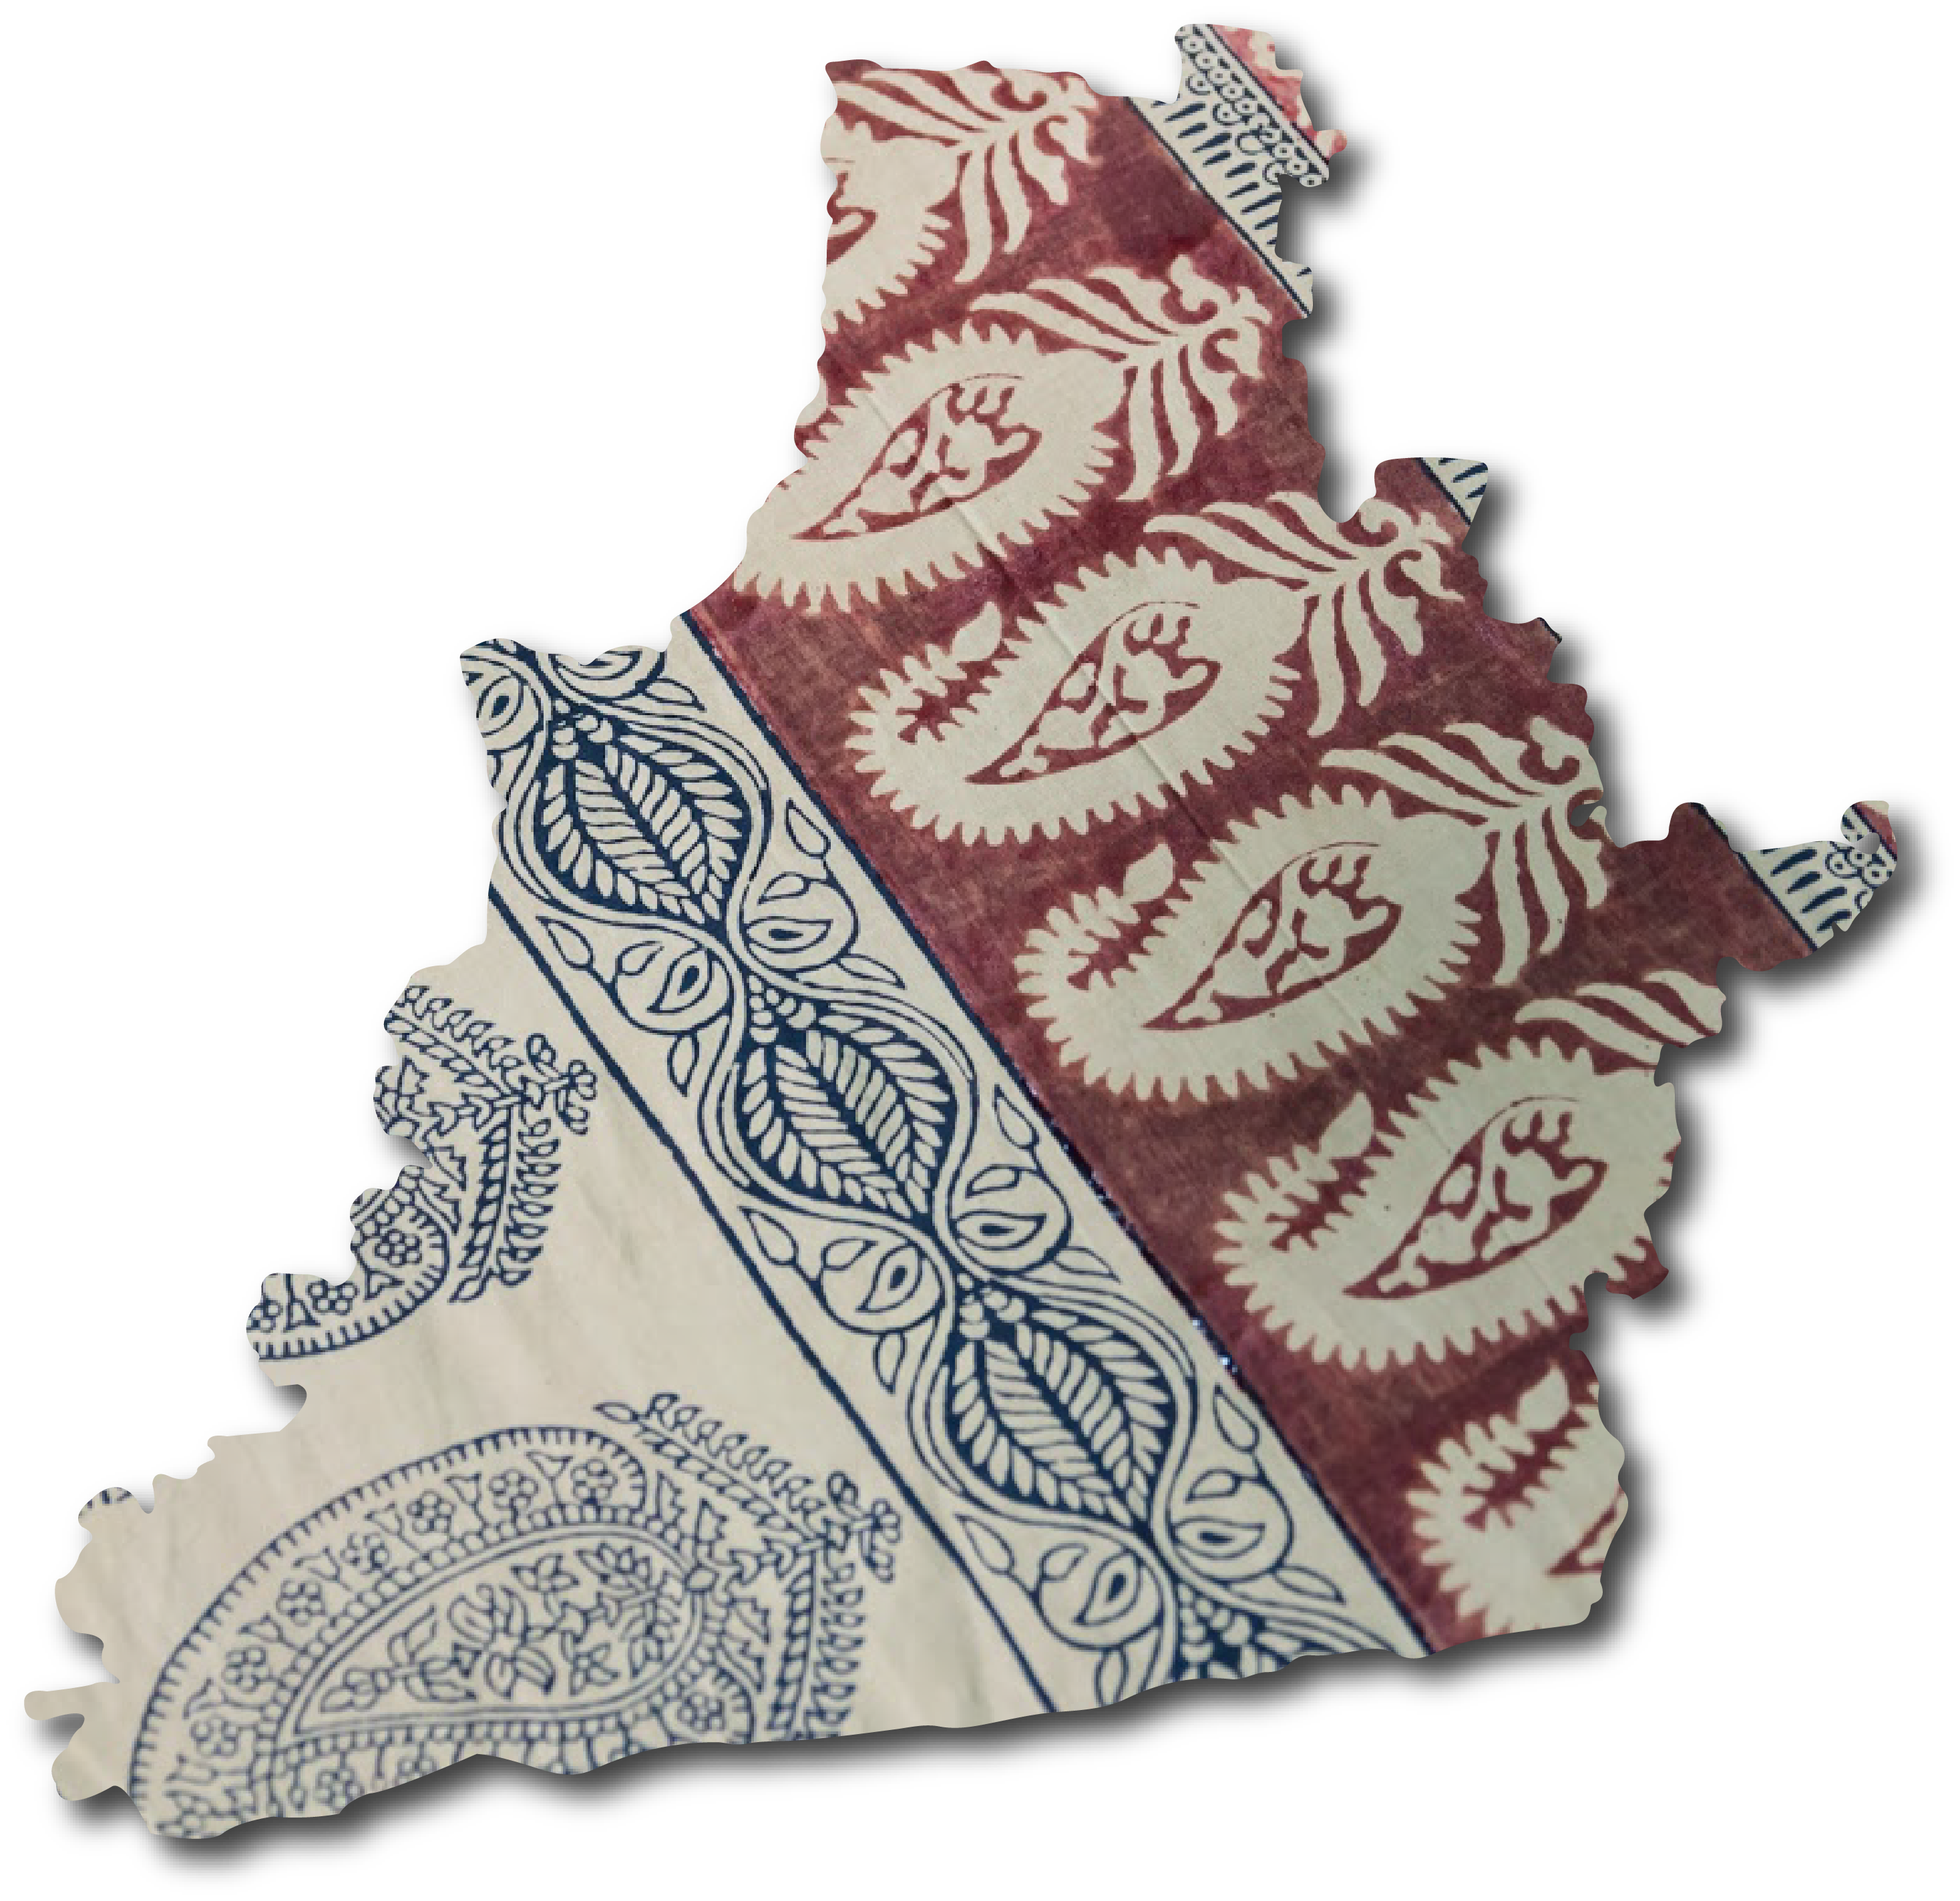 Madhya Pradesh Texttiles Baghprint